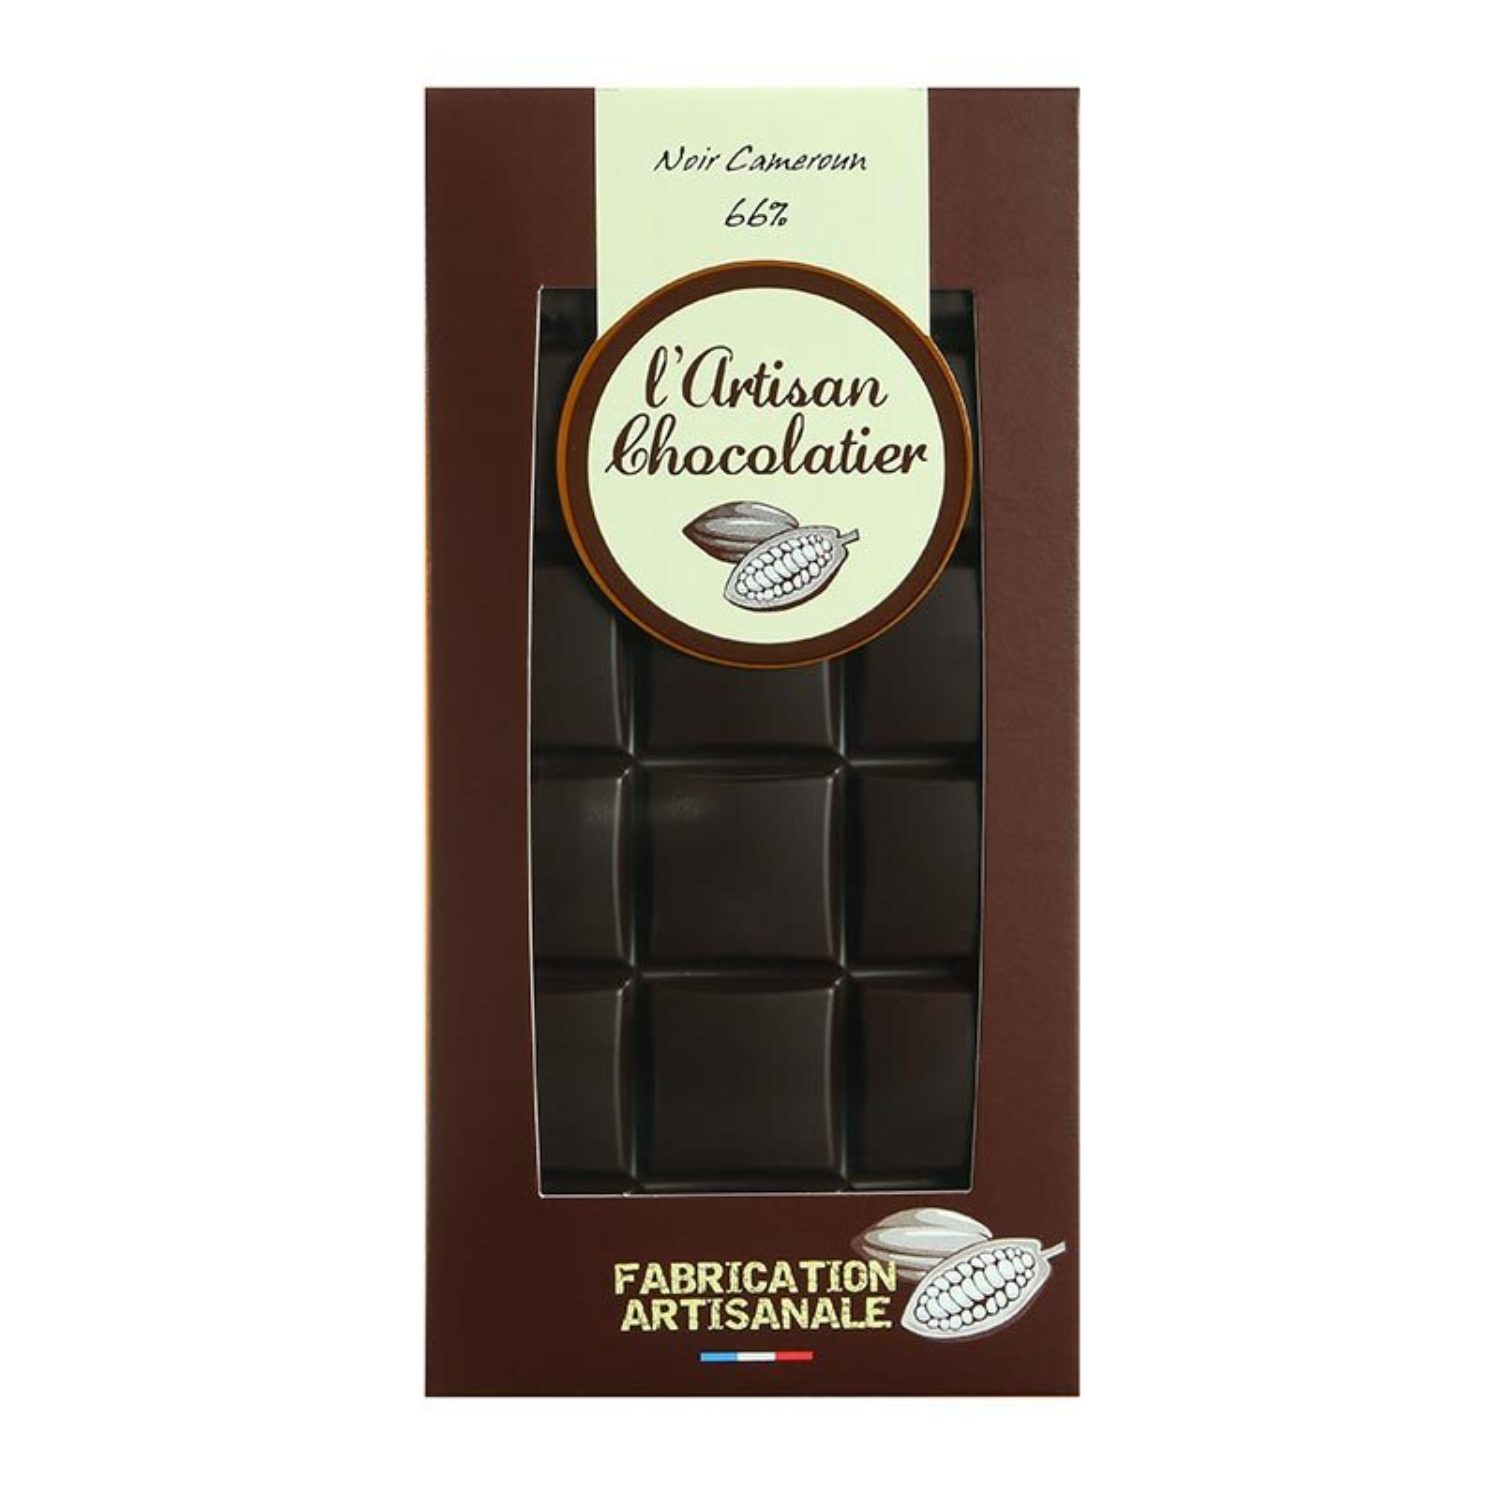 Tablette de chocolat Noir Cameroun 66% L'Artisan Chocolatier Le Comptoir de la Patisserie